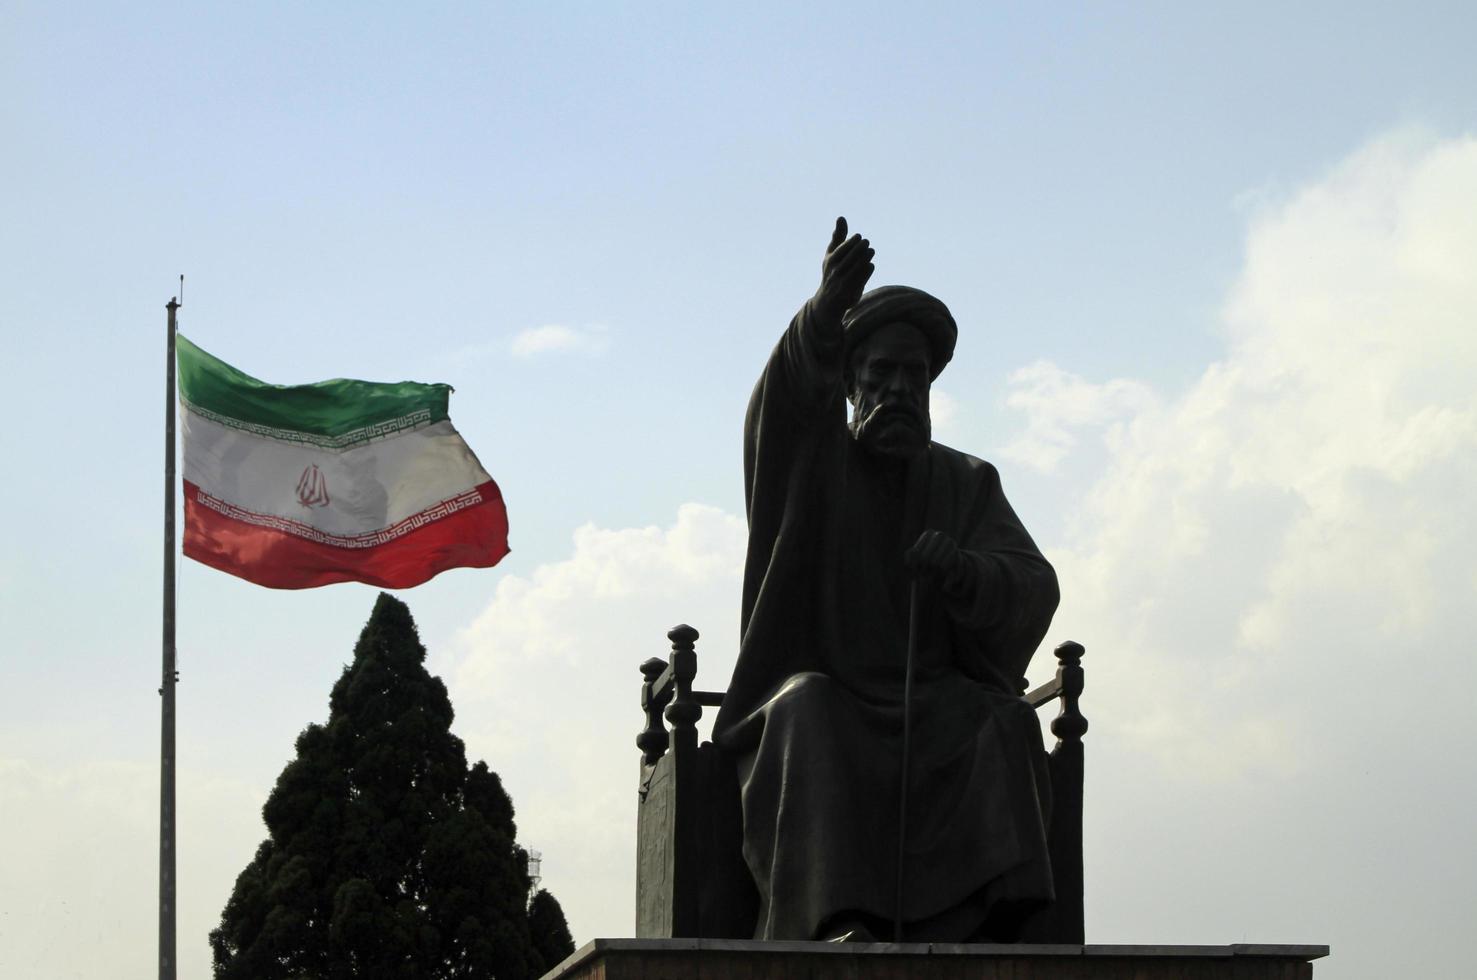 Tehran, Iran - June 10, 2018 - A large Iranian flag waving in the wind behind a statue of Khomeini in Tehran, Iran photo